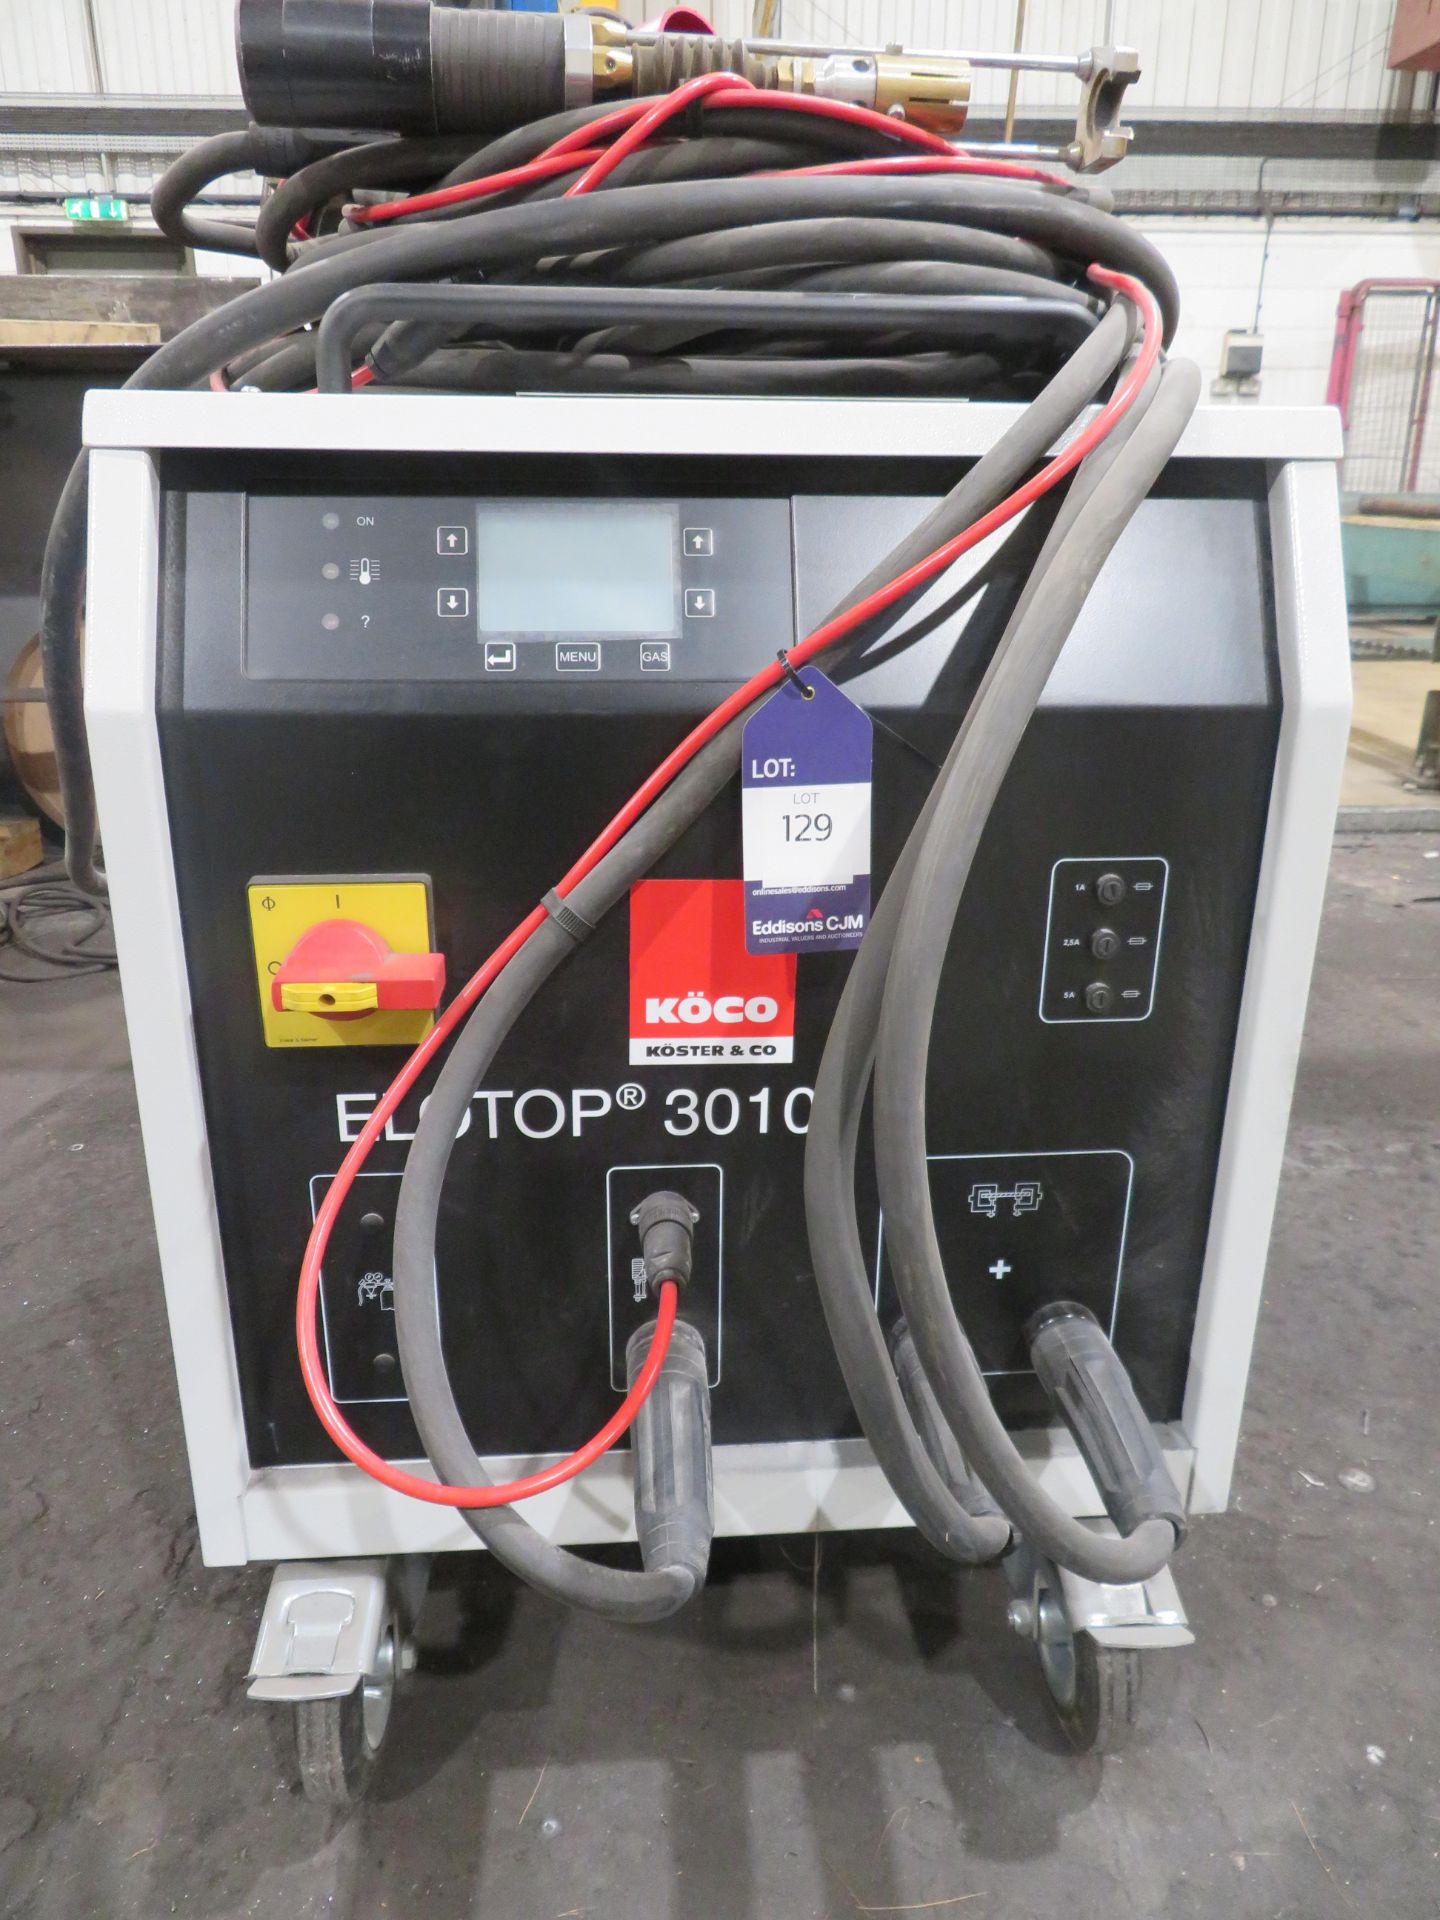 Koco Elotop 3010 stud welder s/n 64200479 with calibration certificate dated 30.06.2020